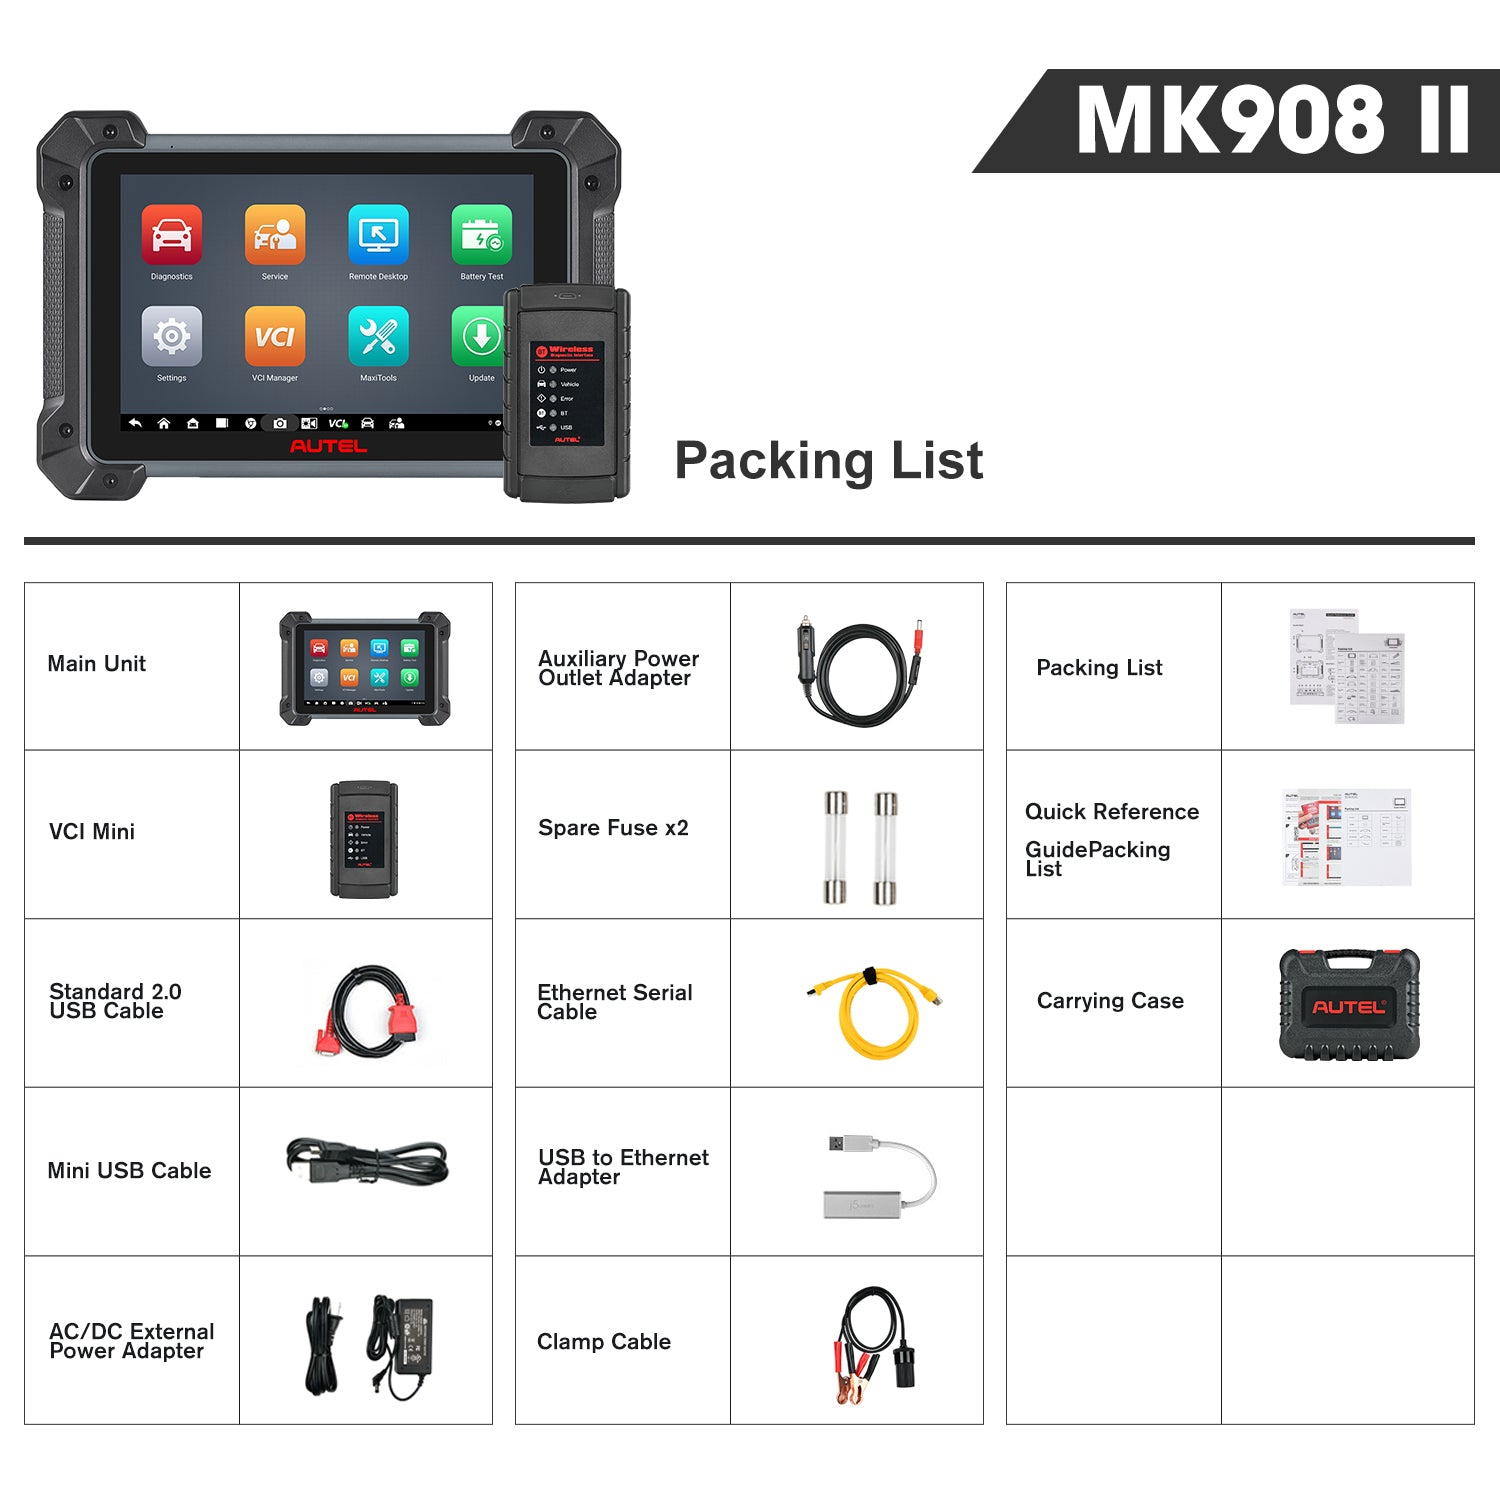 Autel MK908 II Packing List